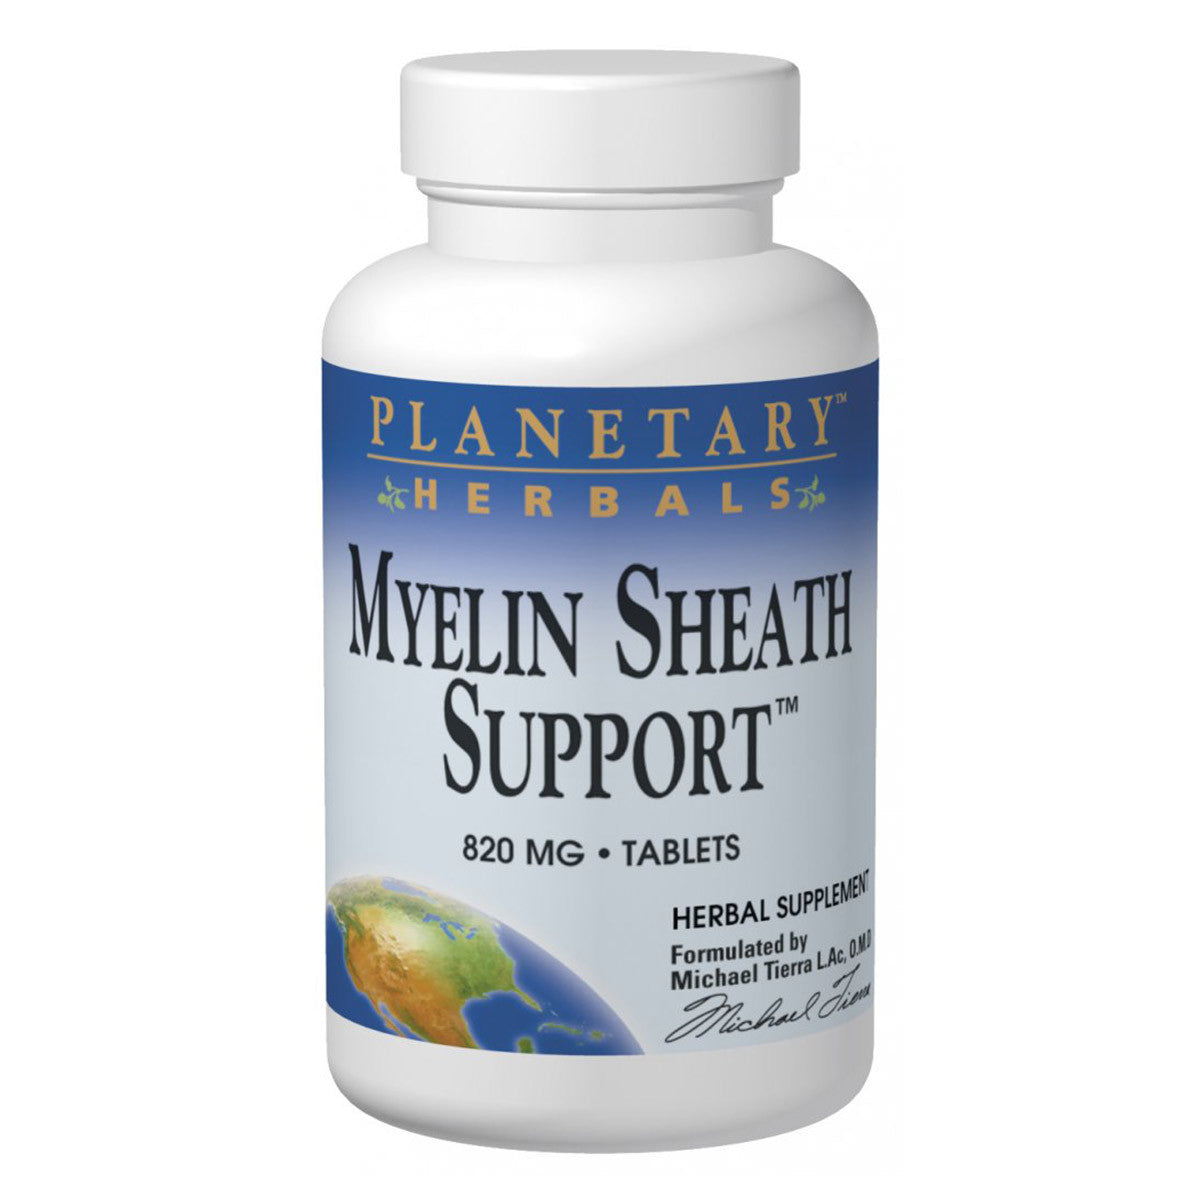 Primary image of Myelin Sheath Support